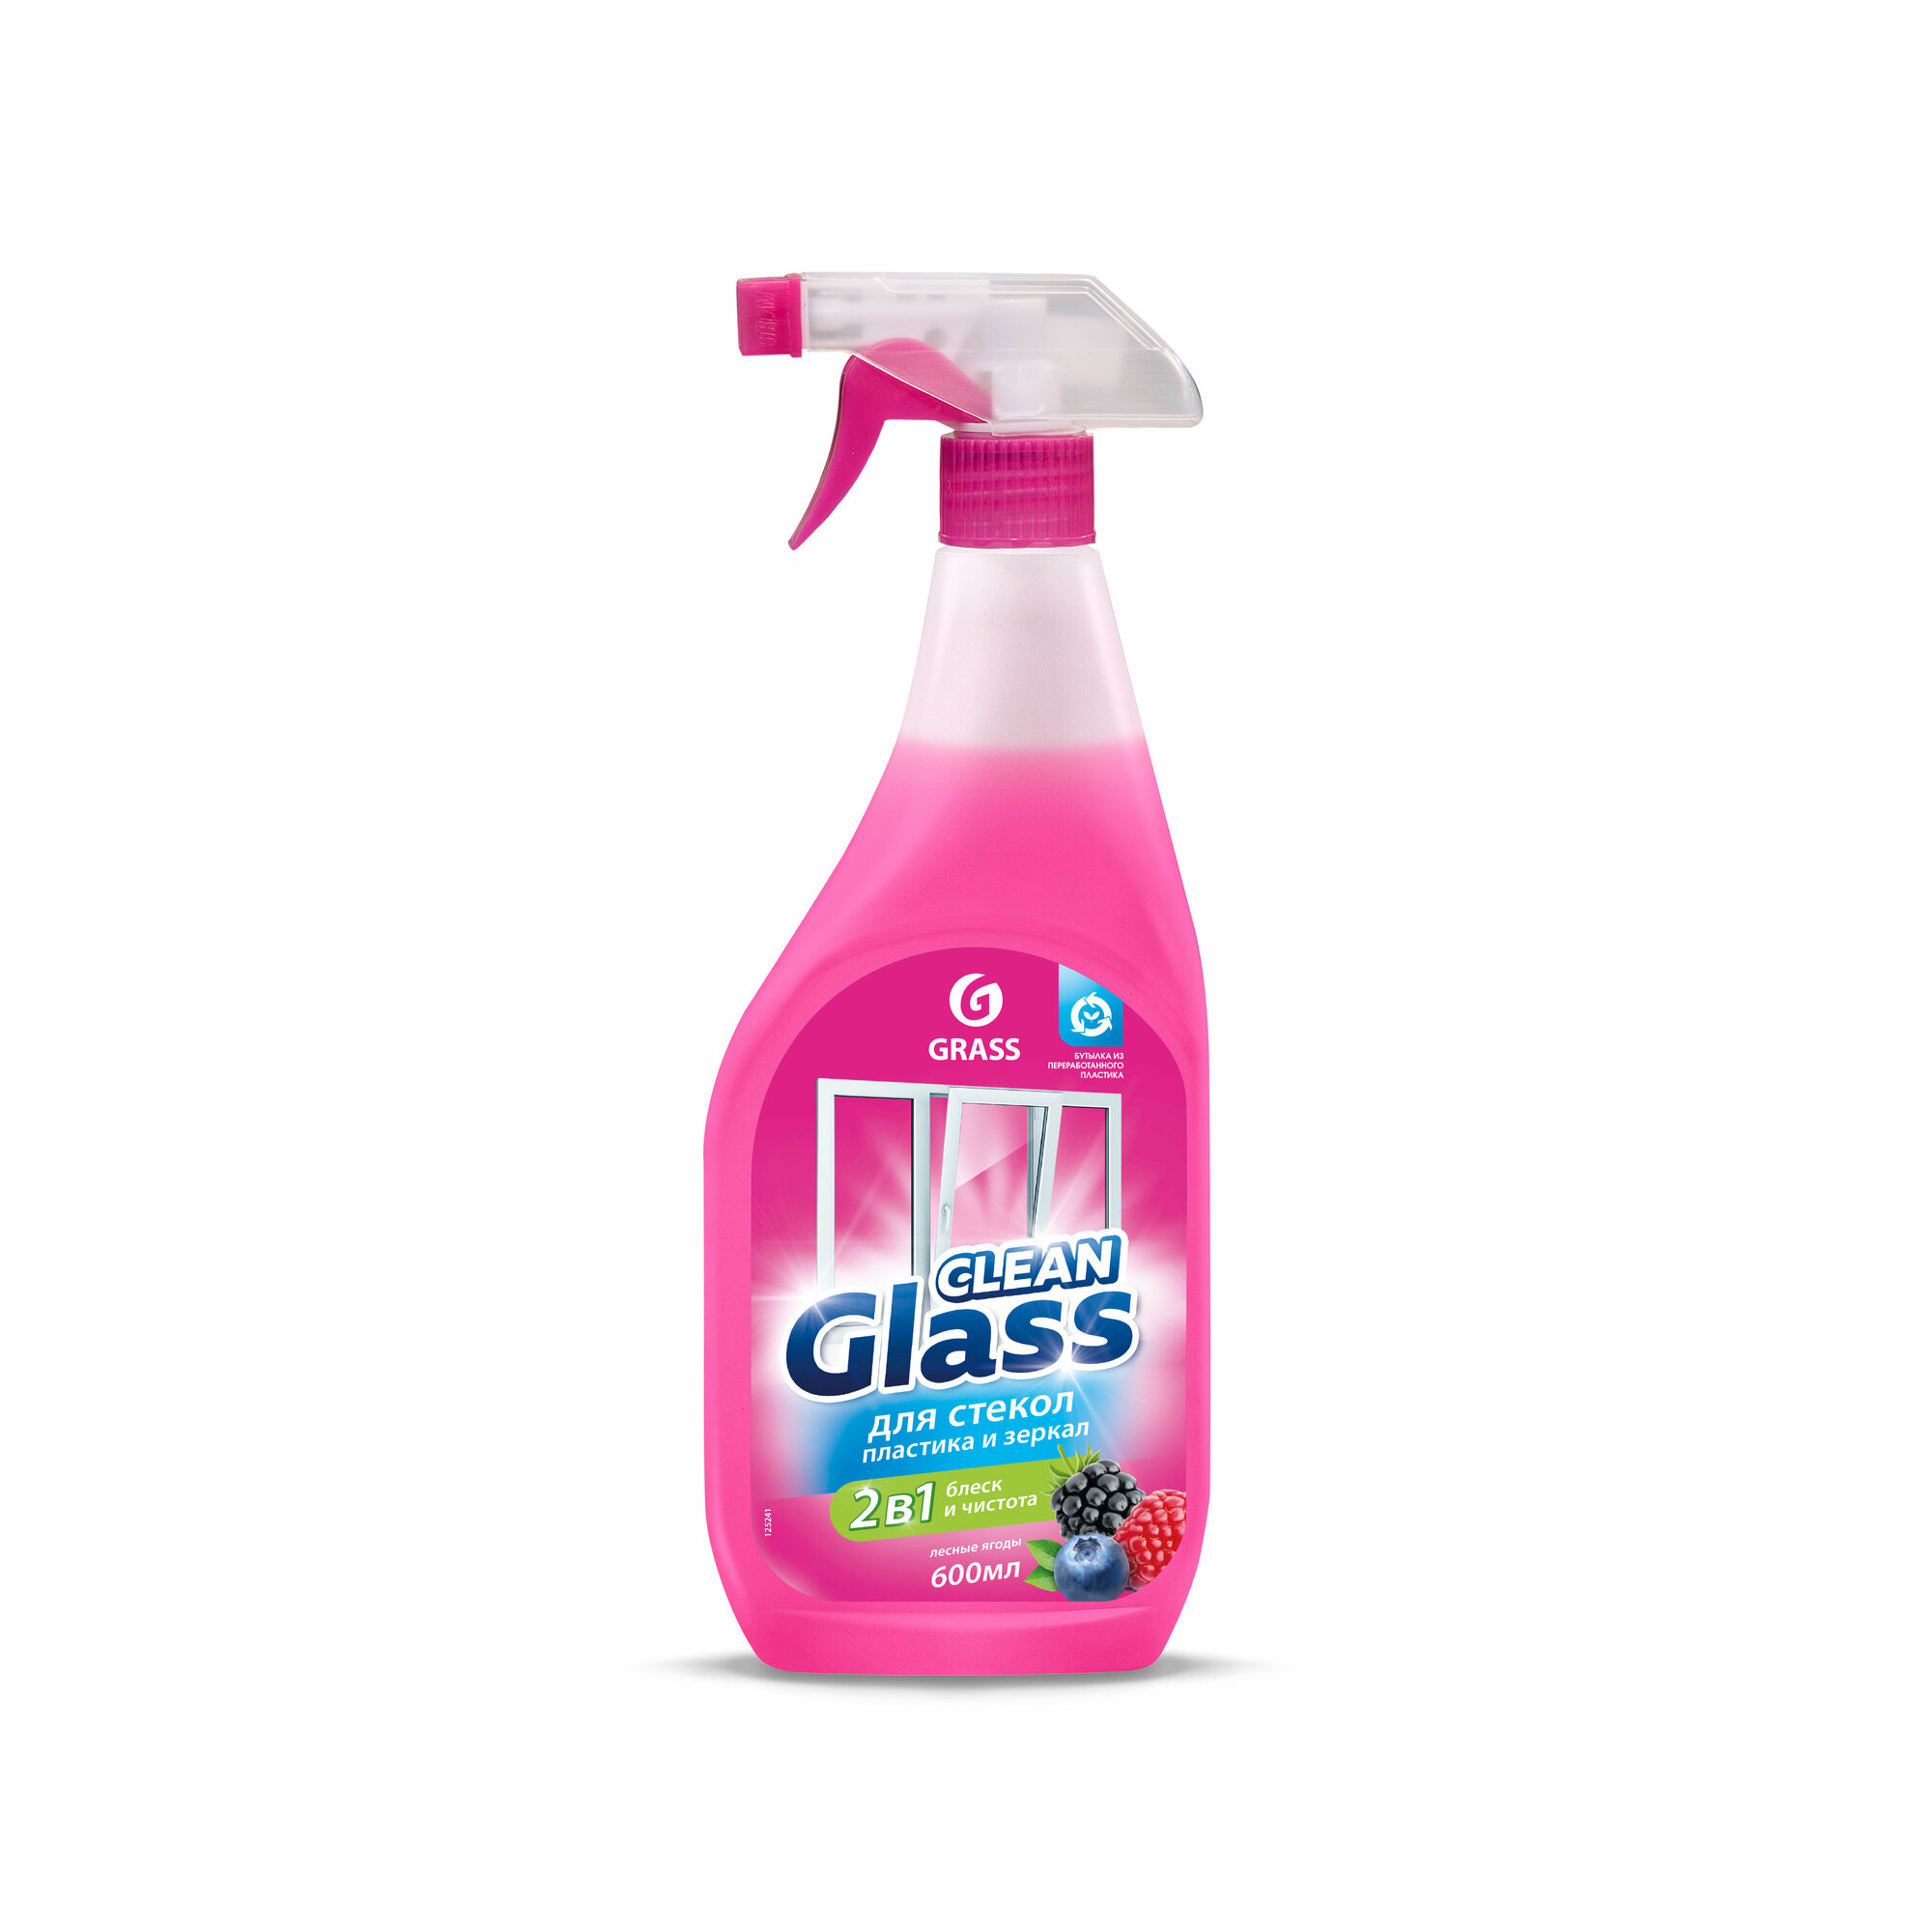 Очиститель стекол Grass Clean Glass блеск стекол и зеркал (лесные ягоды) 600мл